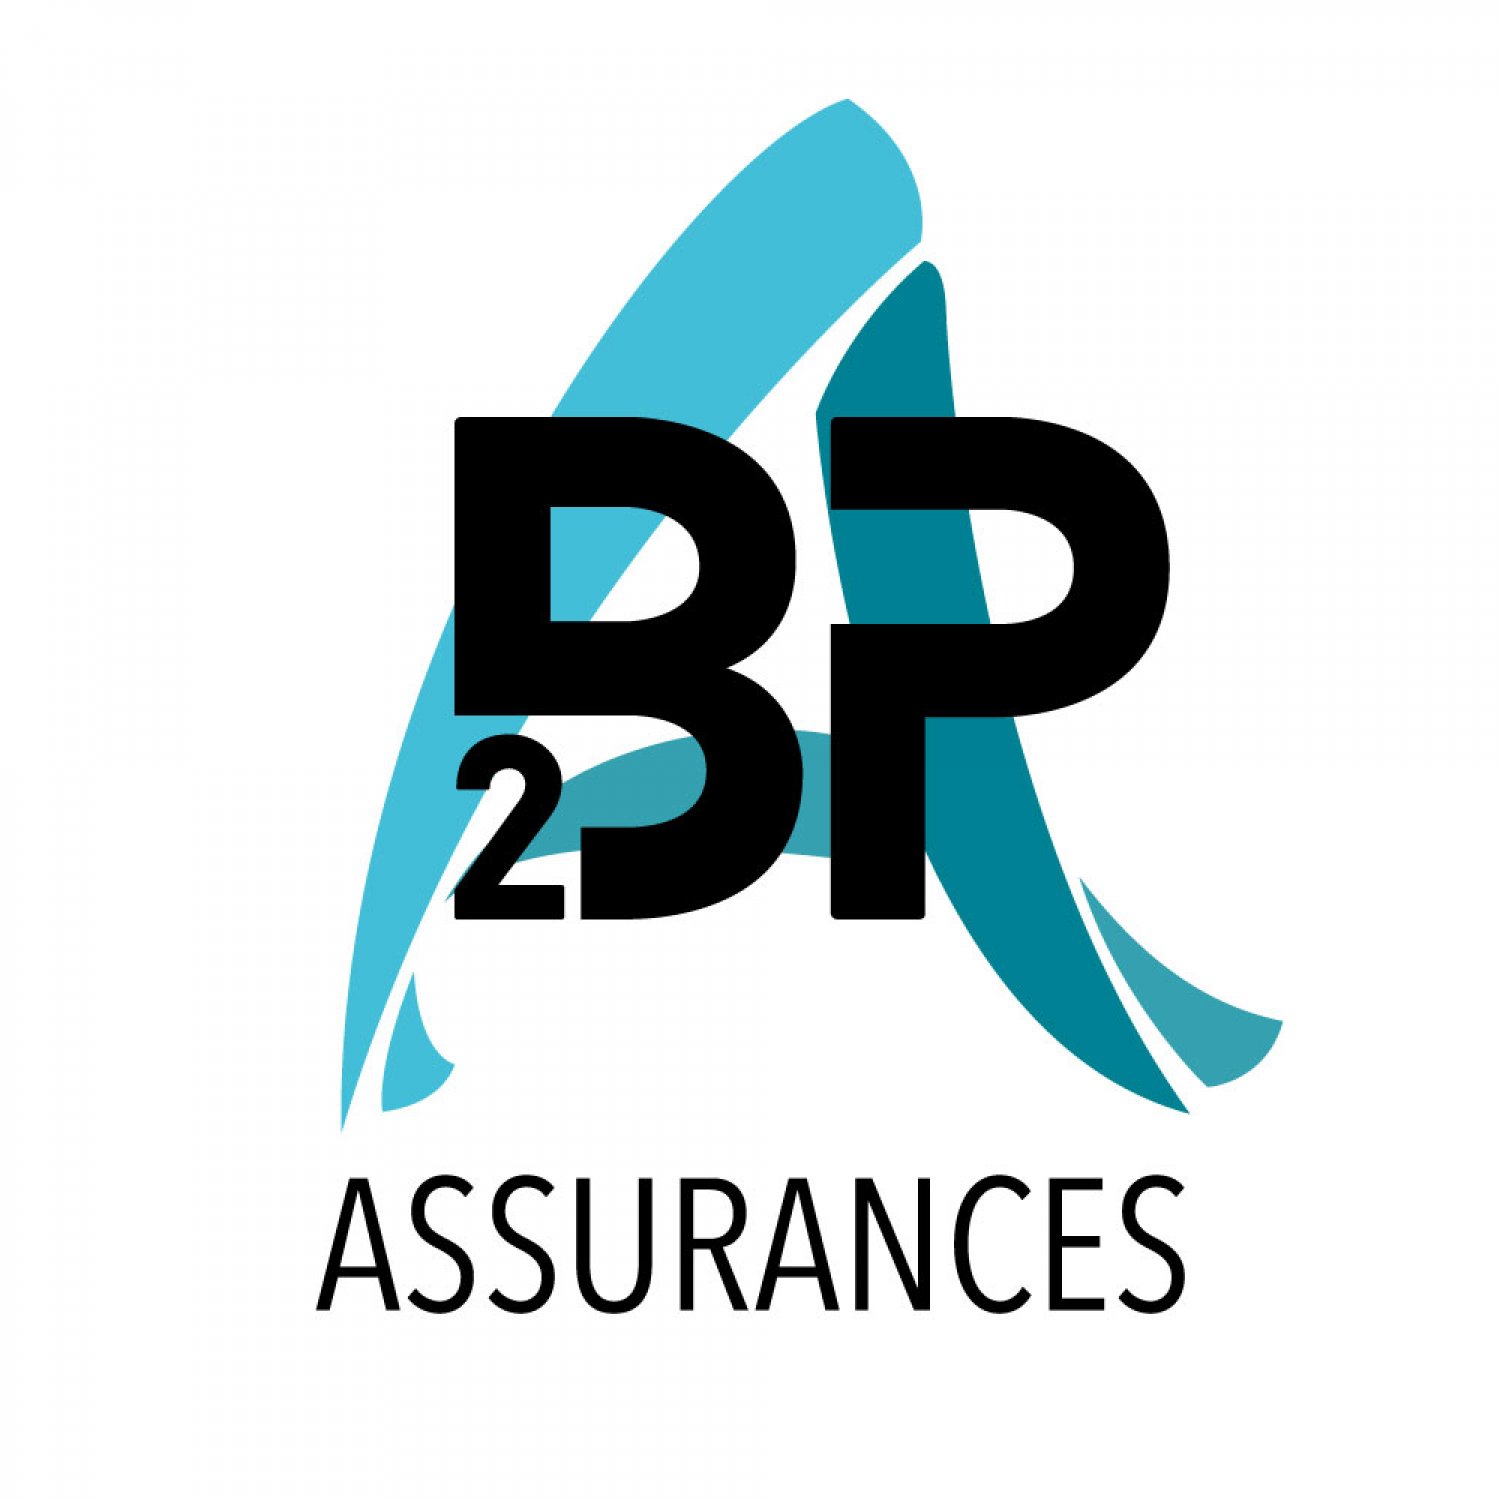 2BP assurances - Poitiers